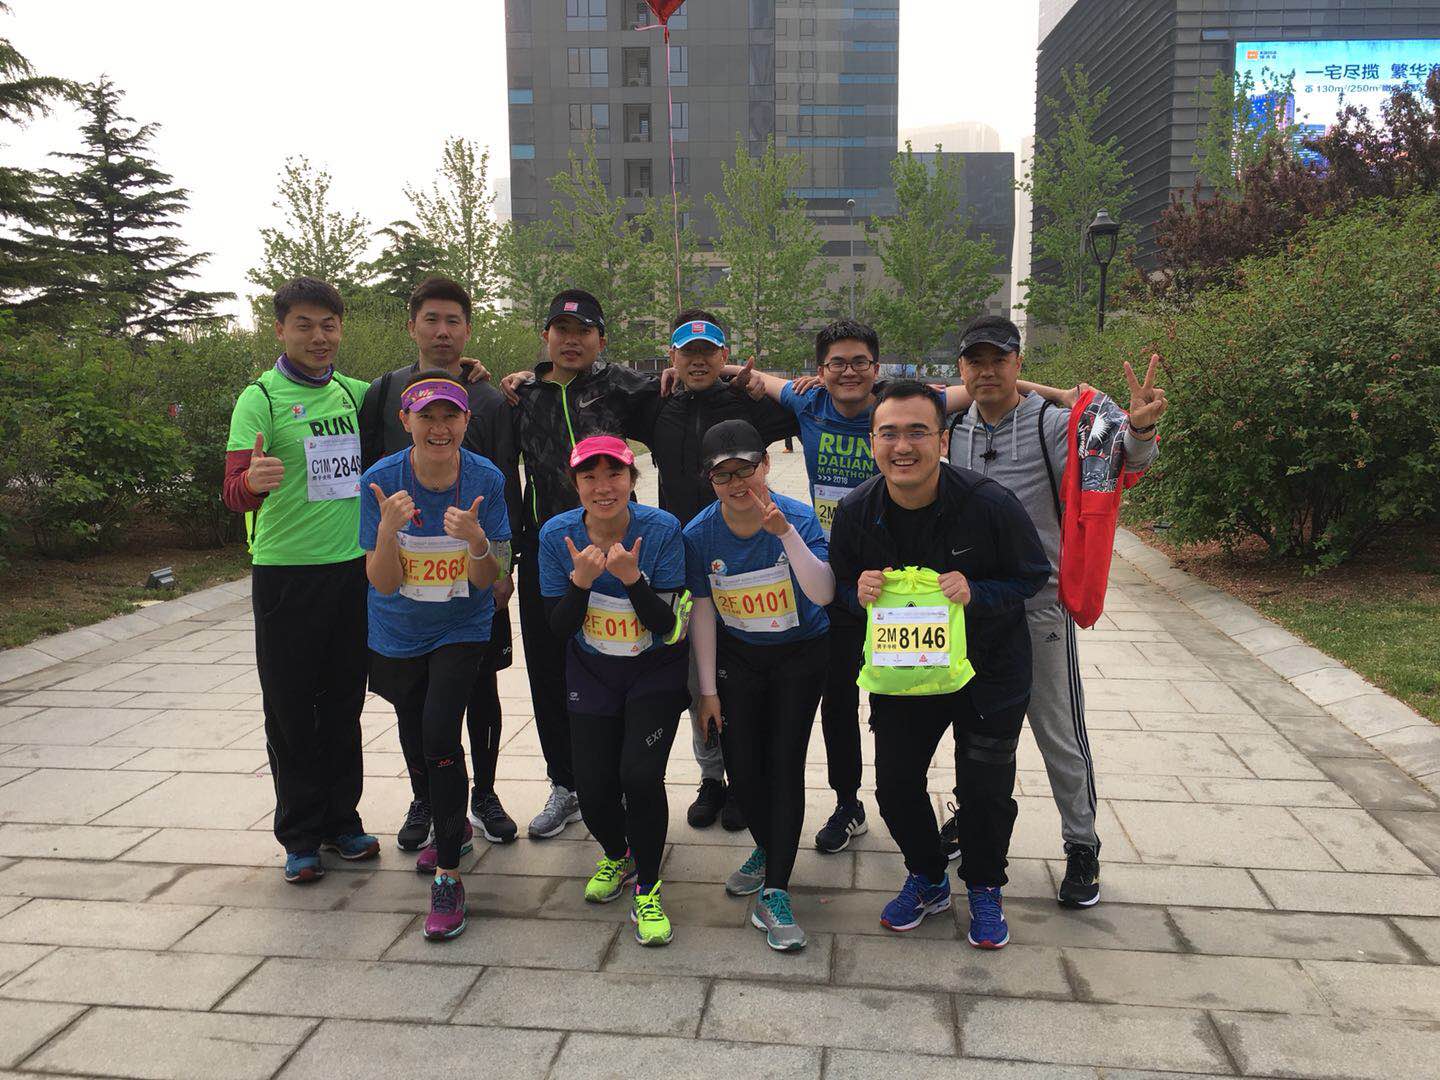 Energetic CA---The 31st Dalian International Marathon